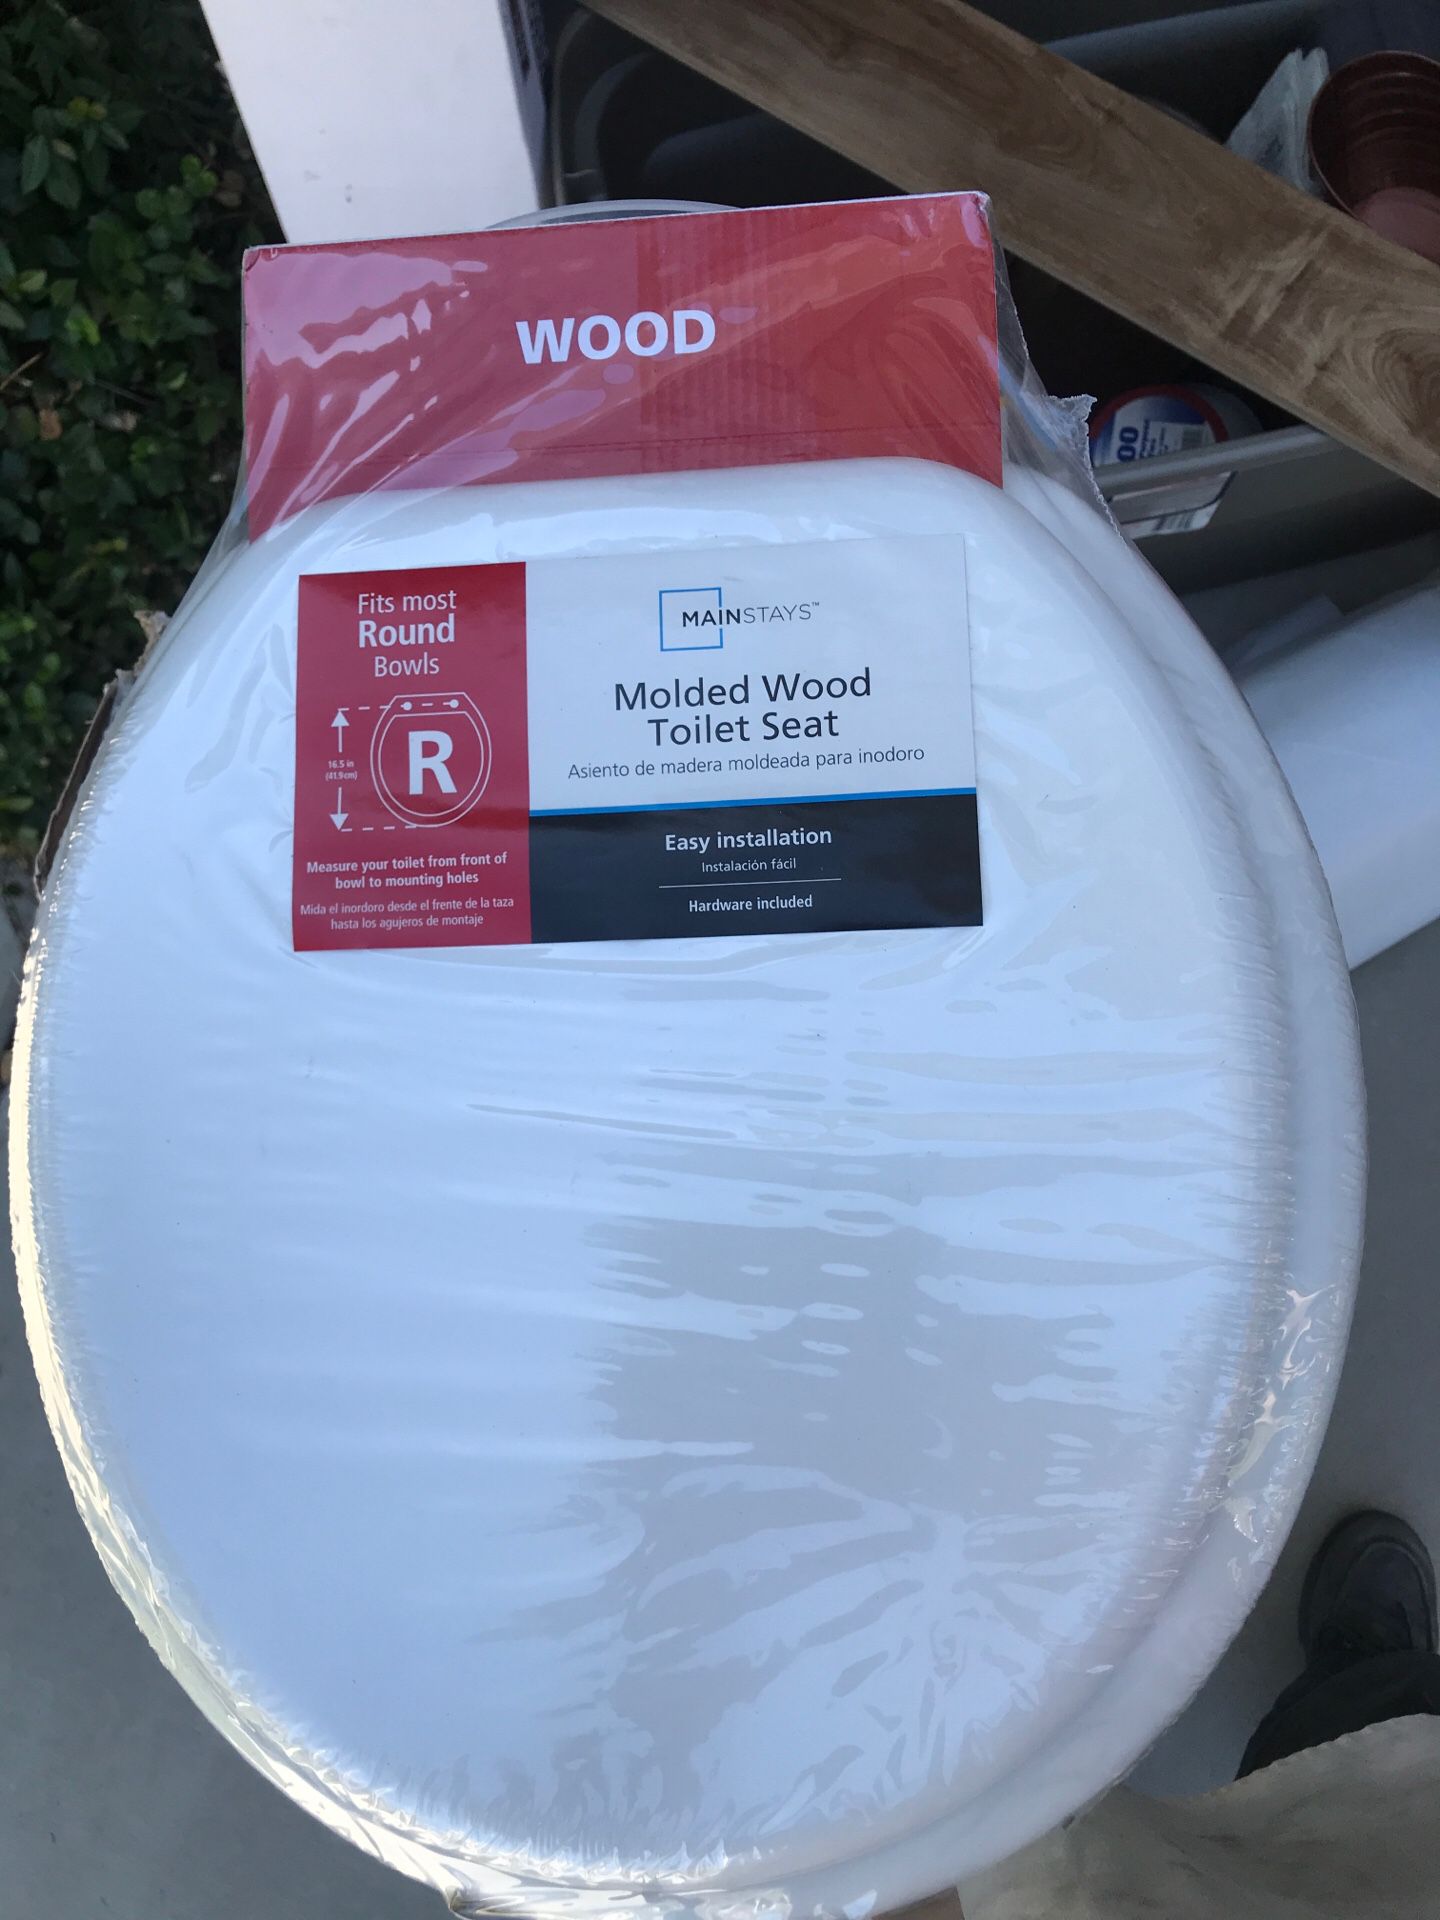 Molded wood toilet seat